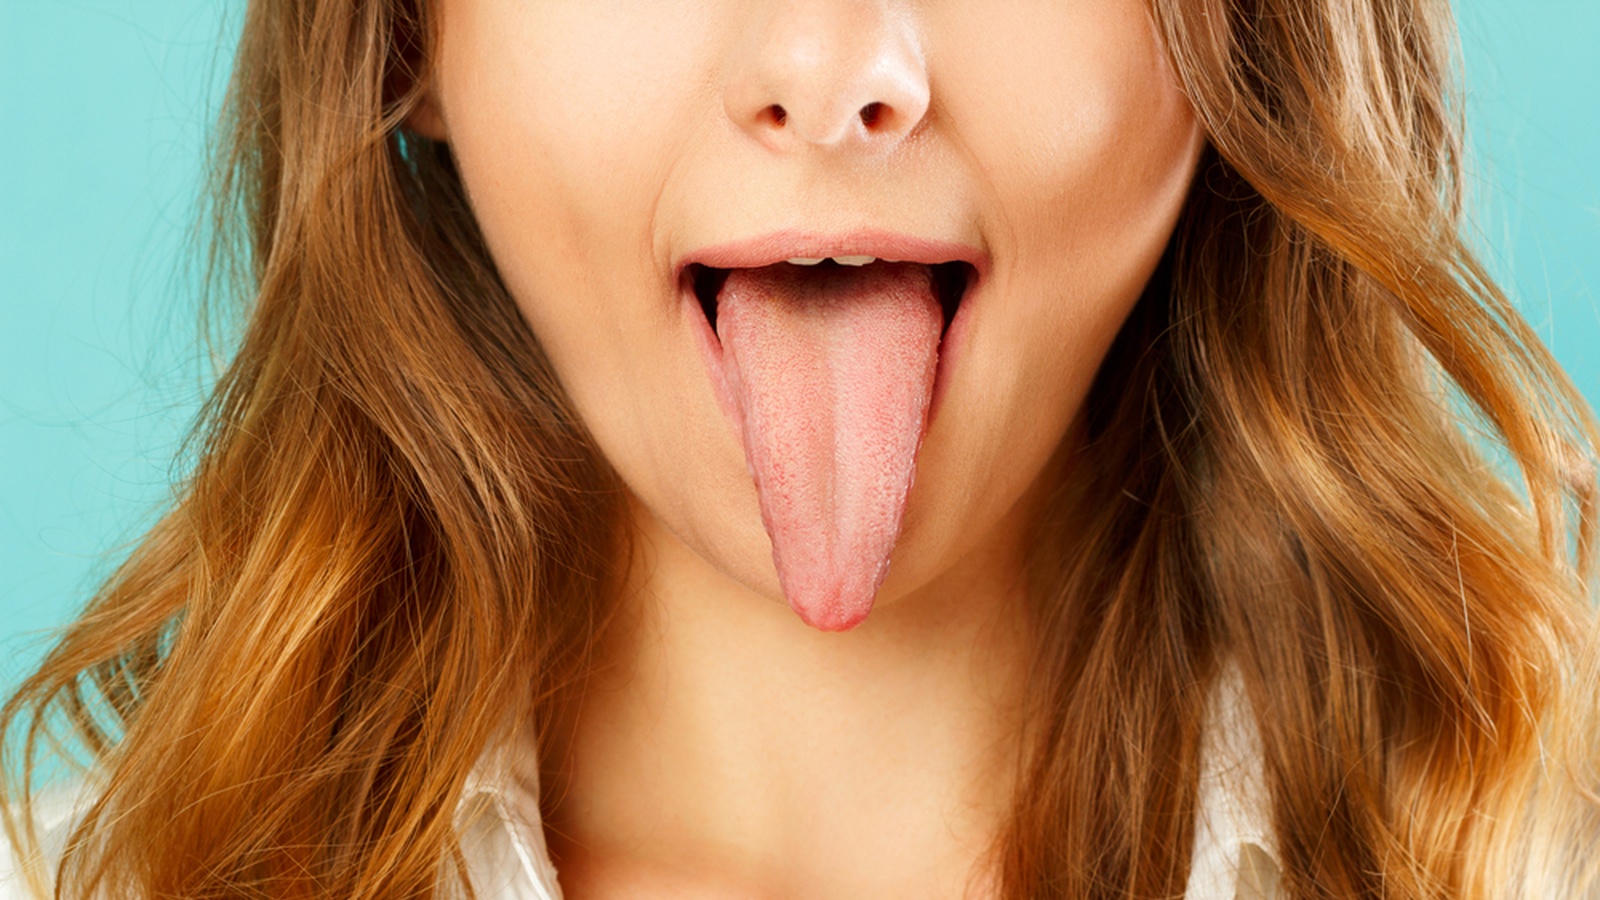 6 Health Benefits Of Using A Tongue Scraper Daily